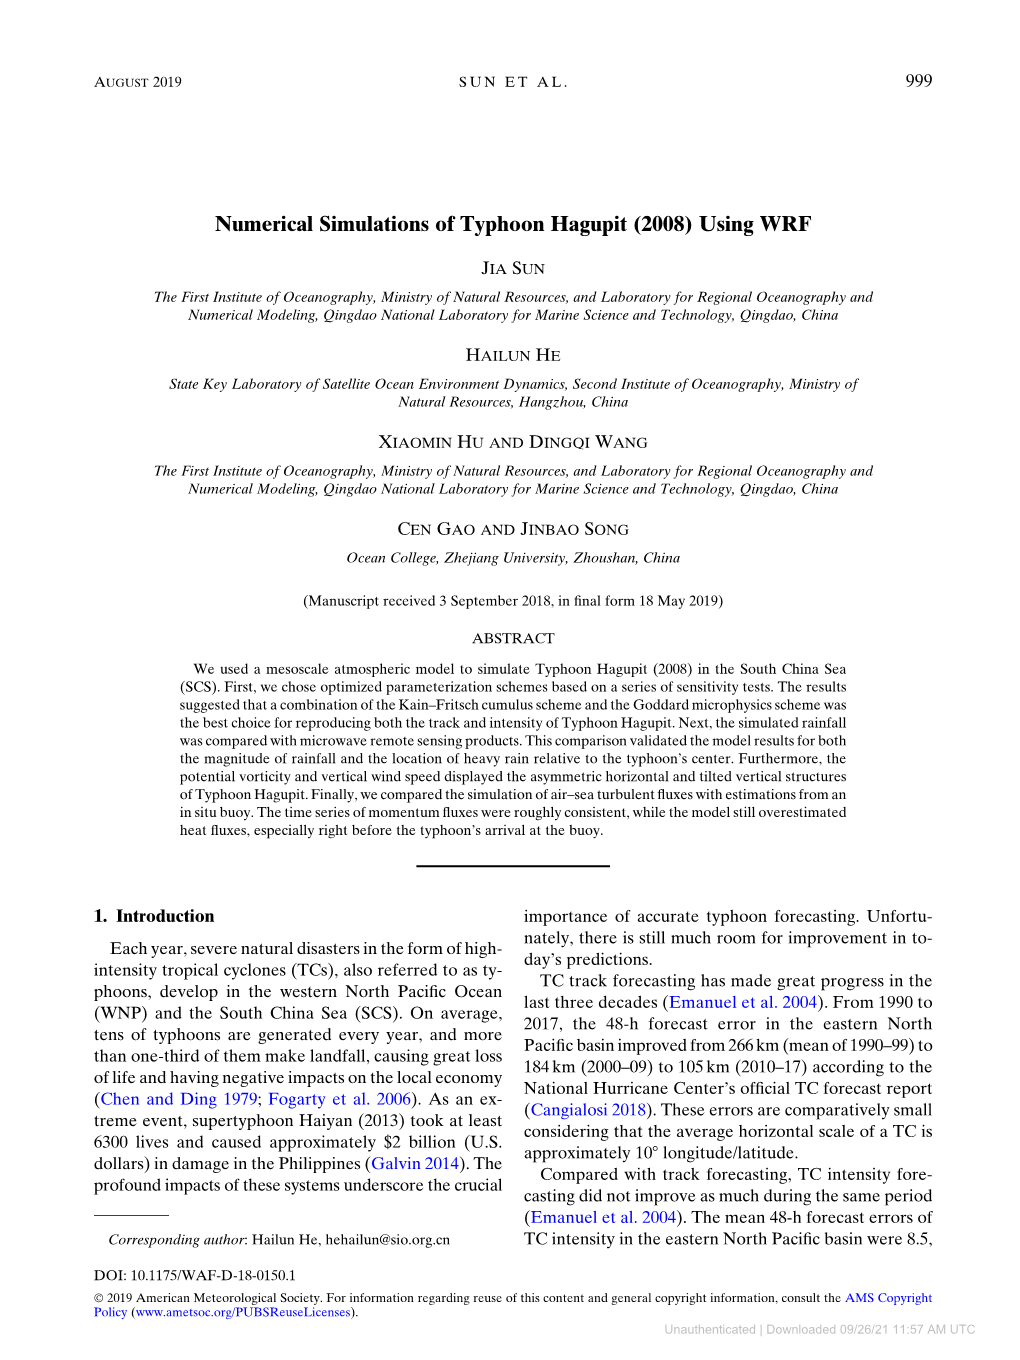 Numerical Simulations of Typhoon Hagupit (2008) Using WRF